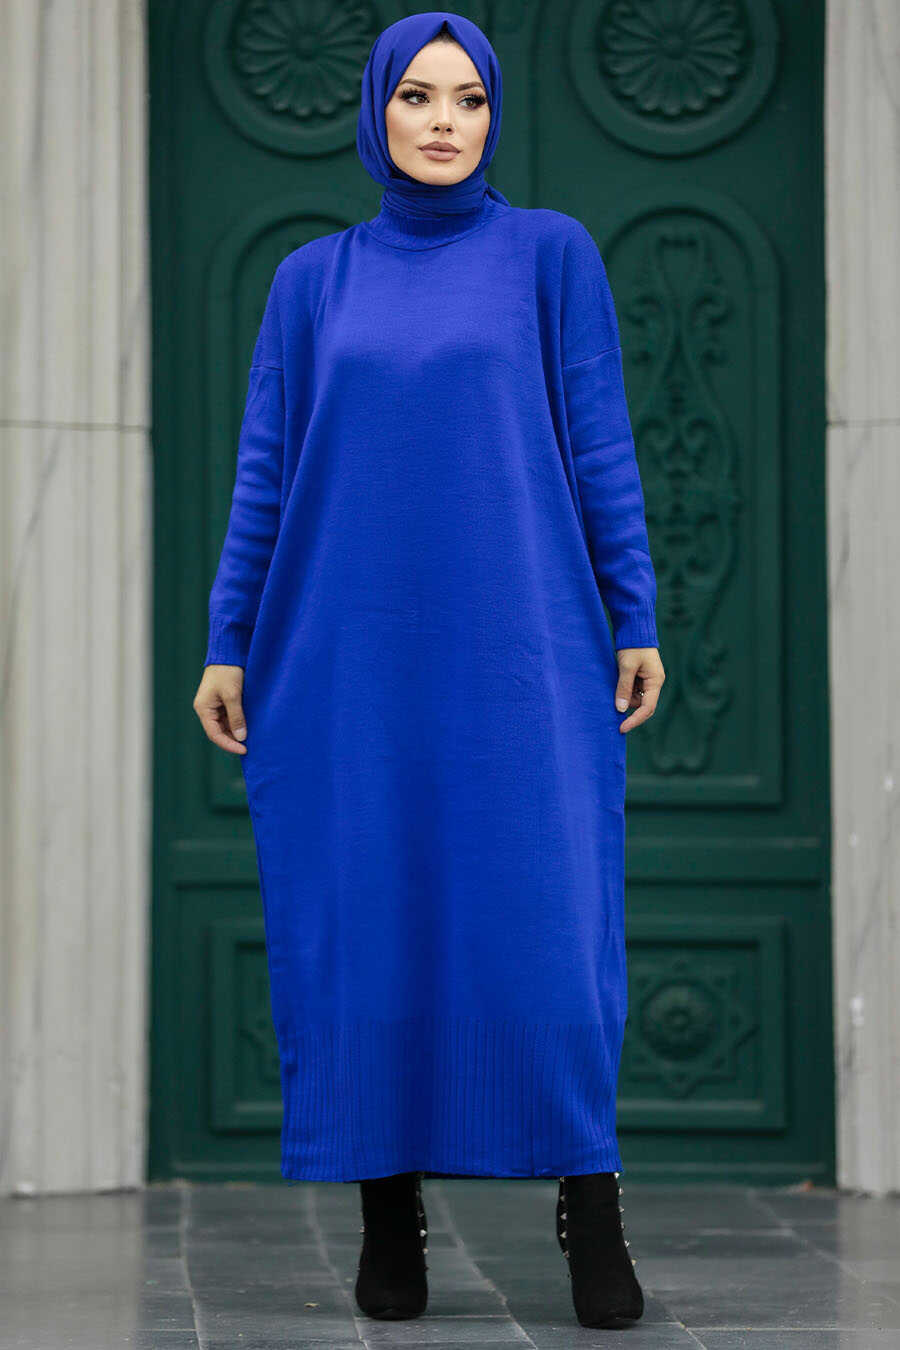 Neva Style - Sax Blue Long Dress for Muslim Ladies Knitwear Dress 3409SX